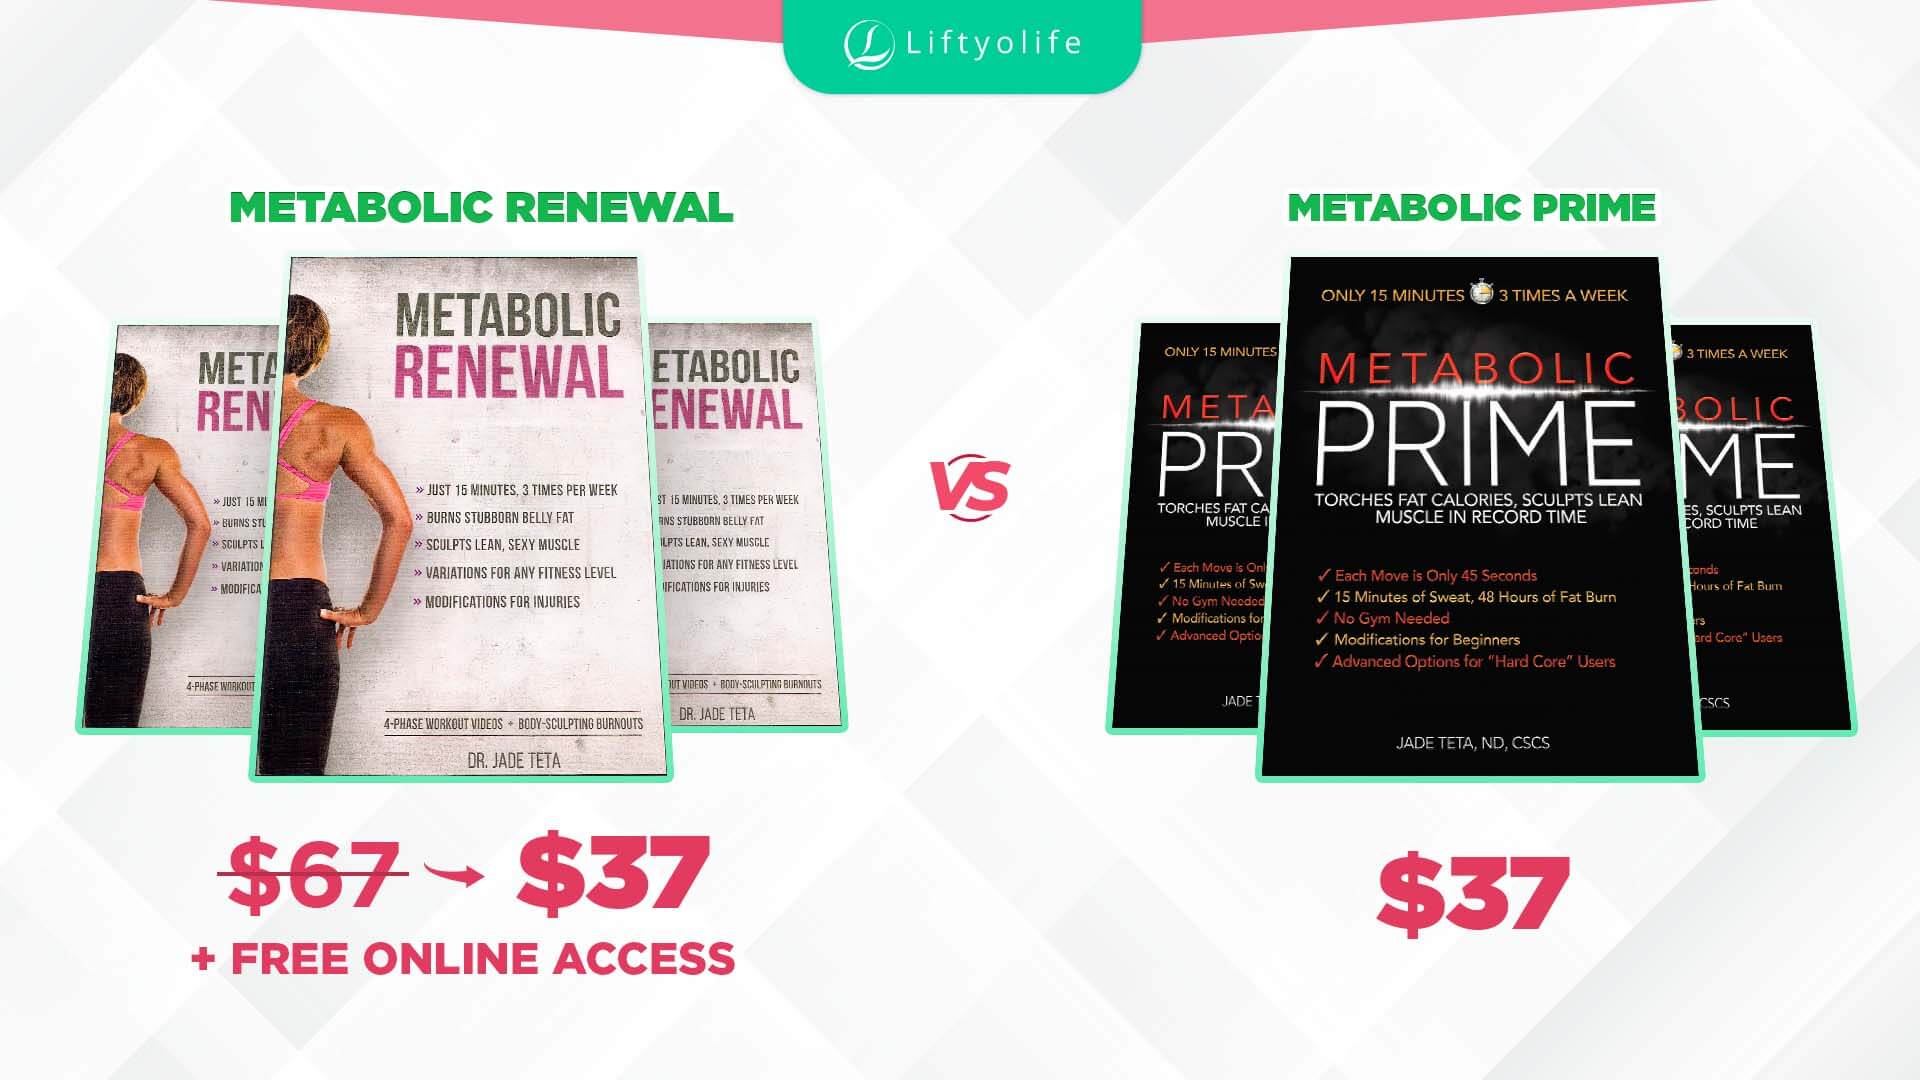 Metabolic Renewal vs Metabolic Prime: The Price